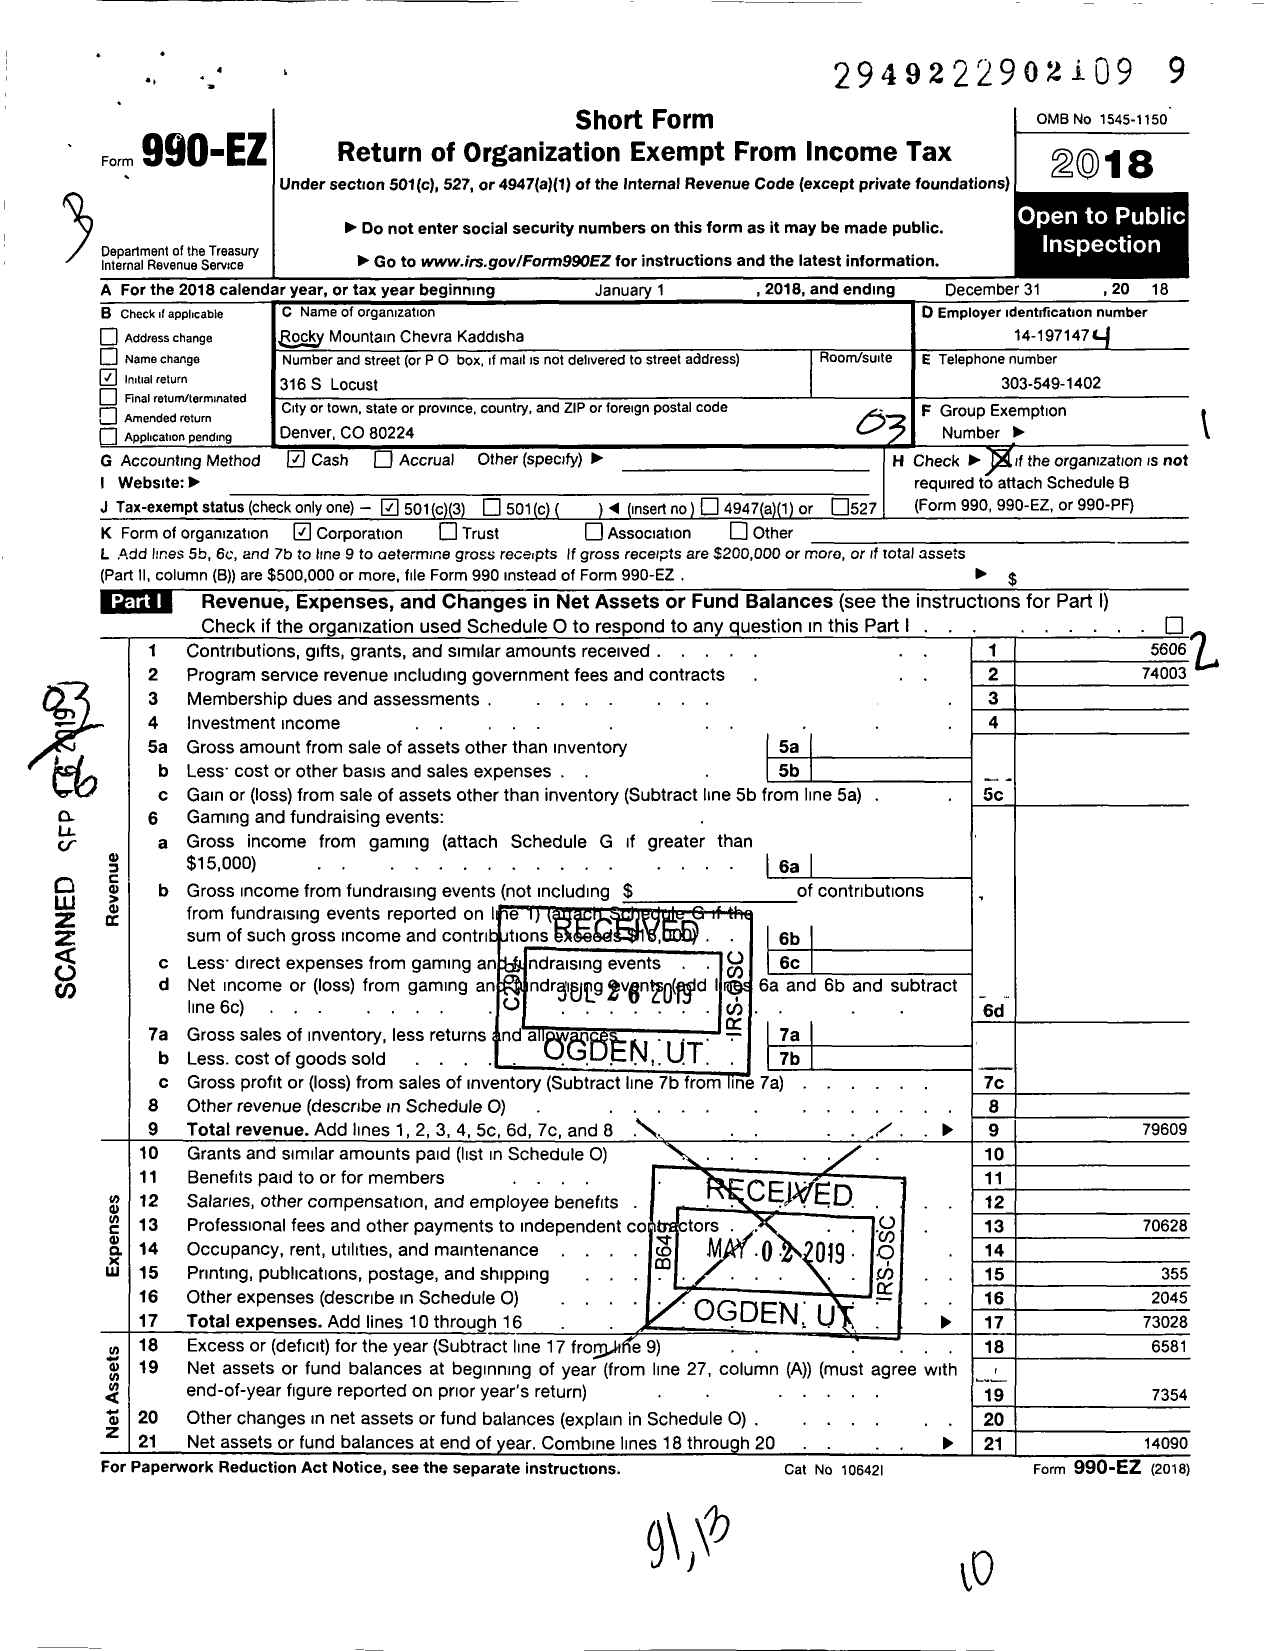 Image of first page of 2018 Form 990EZ for Rocky Mountain Chevra Kaddisha